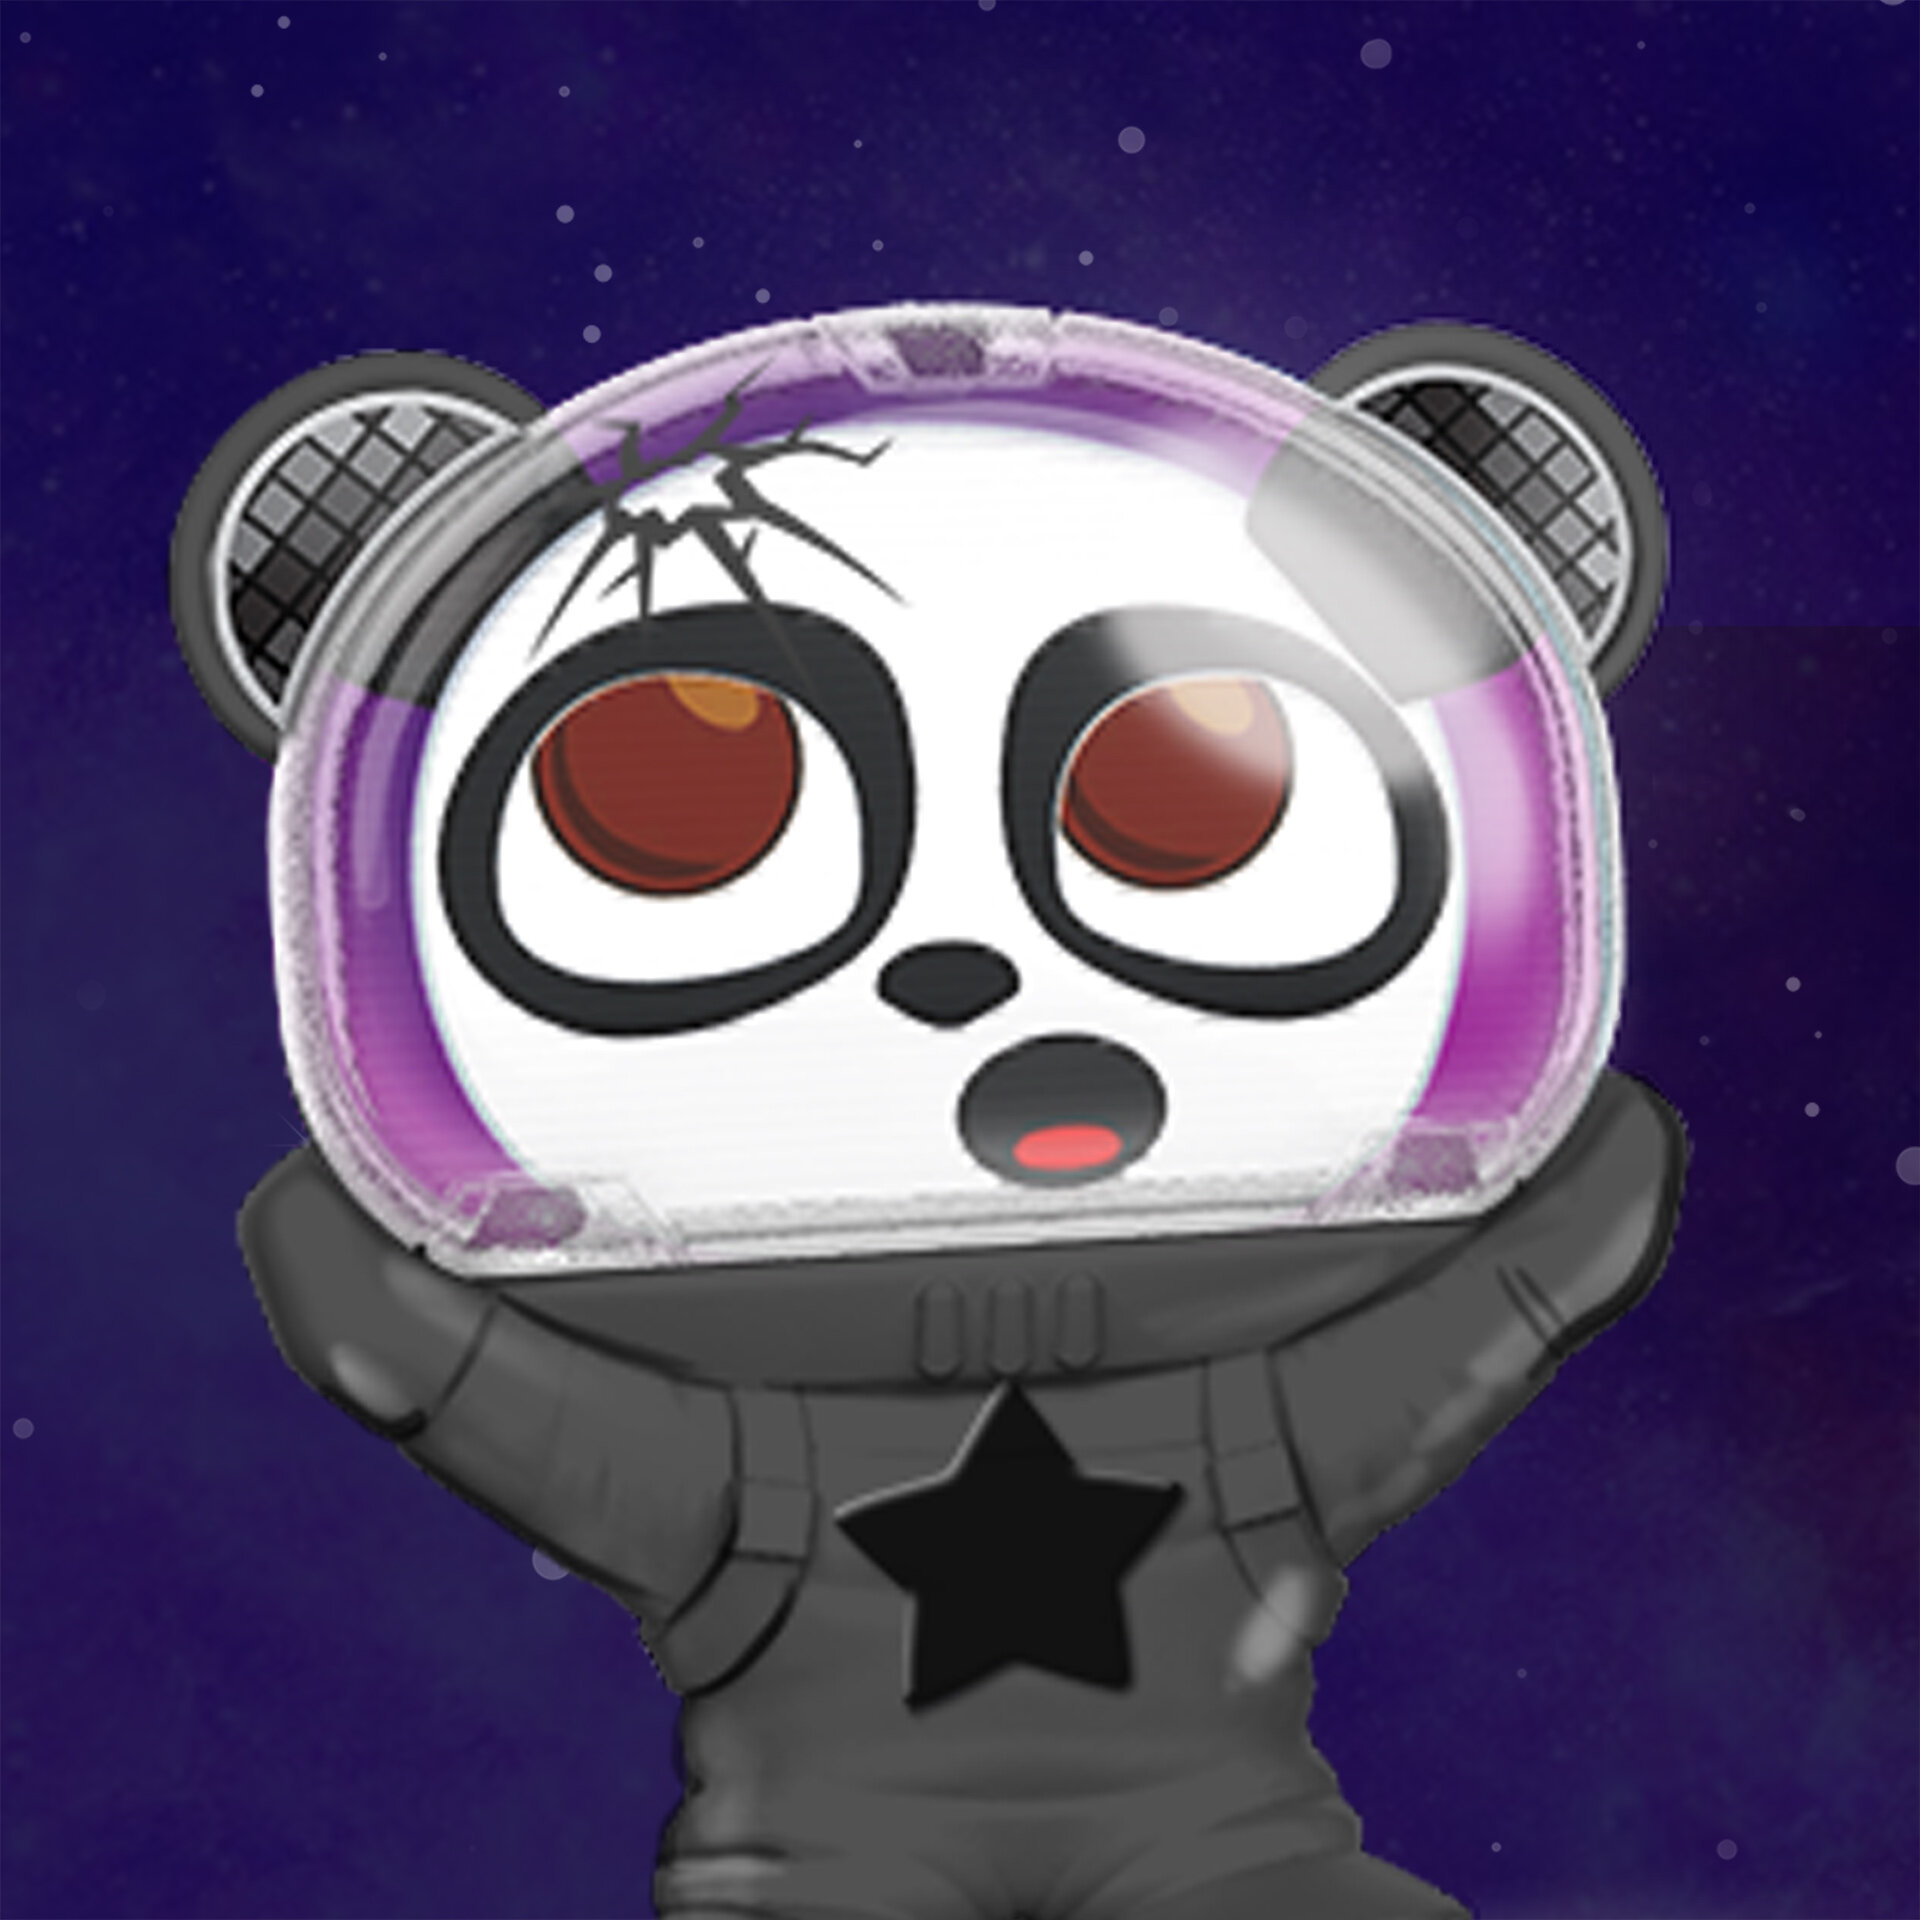 Oz-Panda-Space-Toy-Freddo-Treasures.jpg